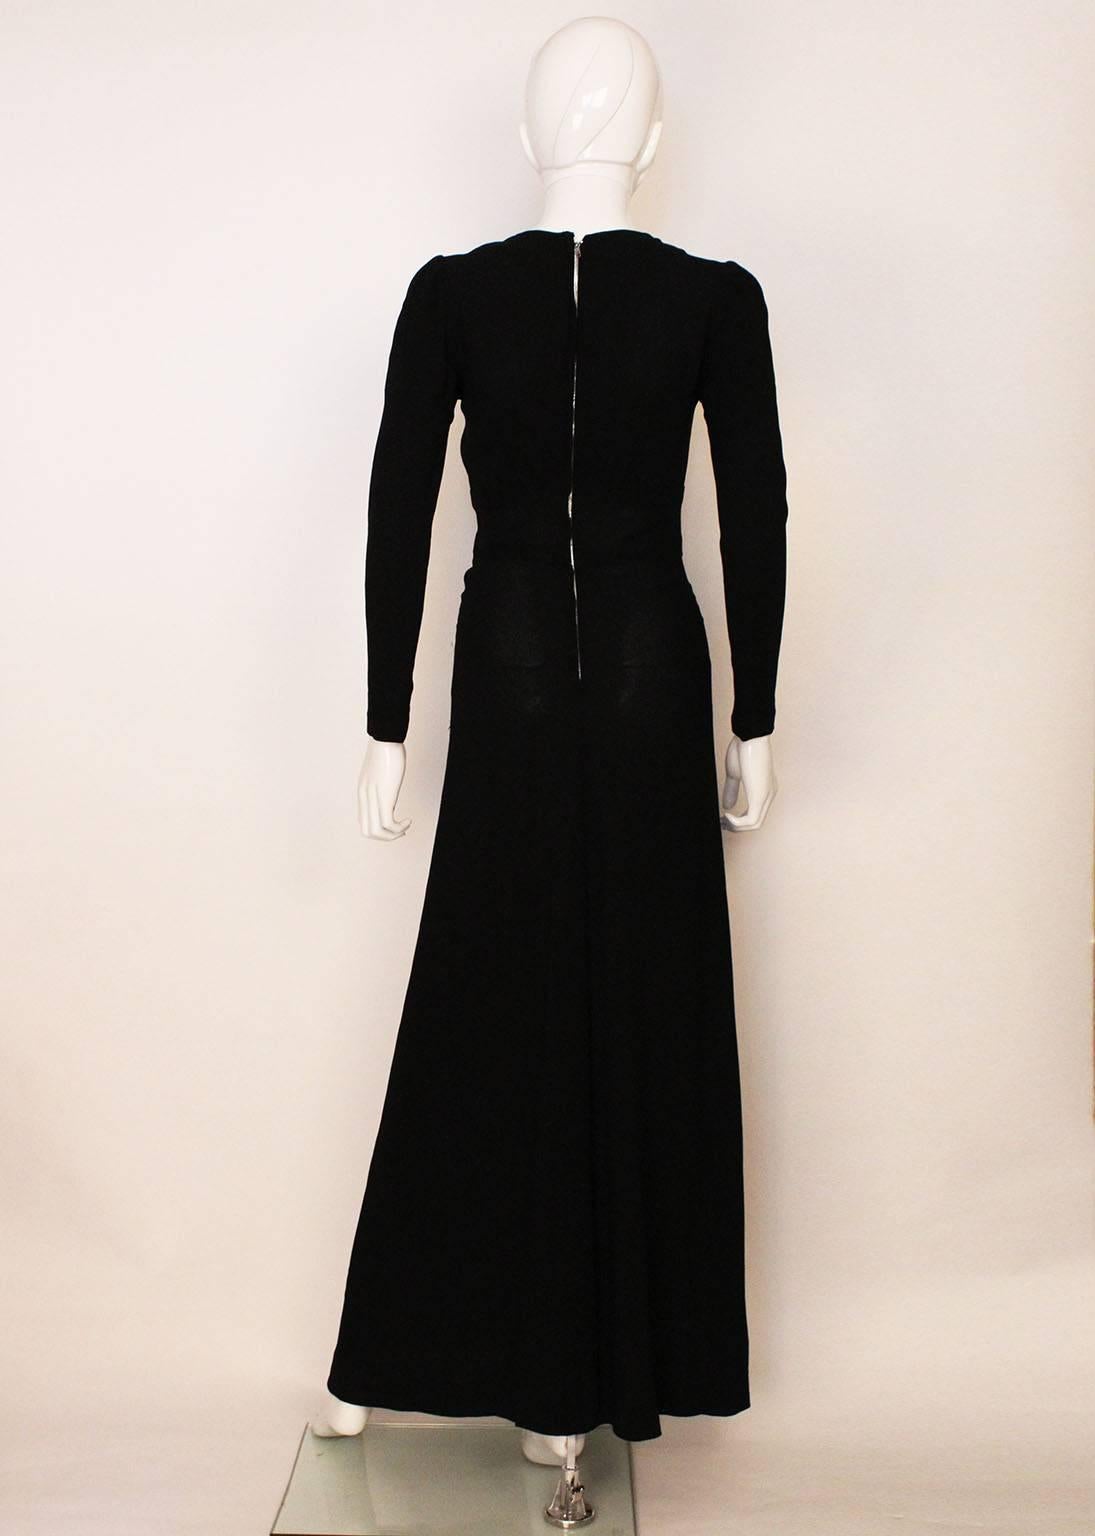 Women's Ossie Clark Black Moss Crepe Maxi Dress, 1970s 